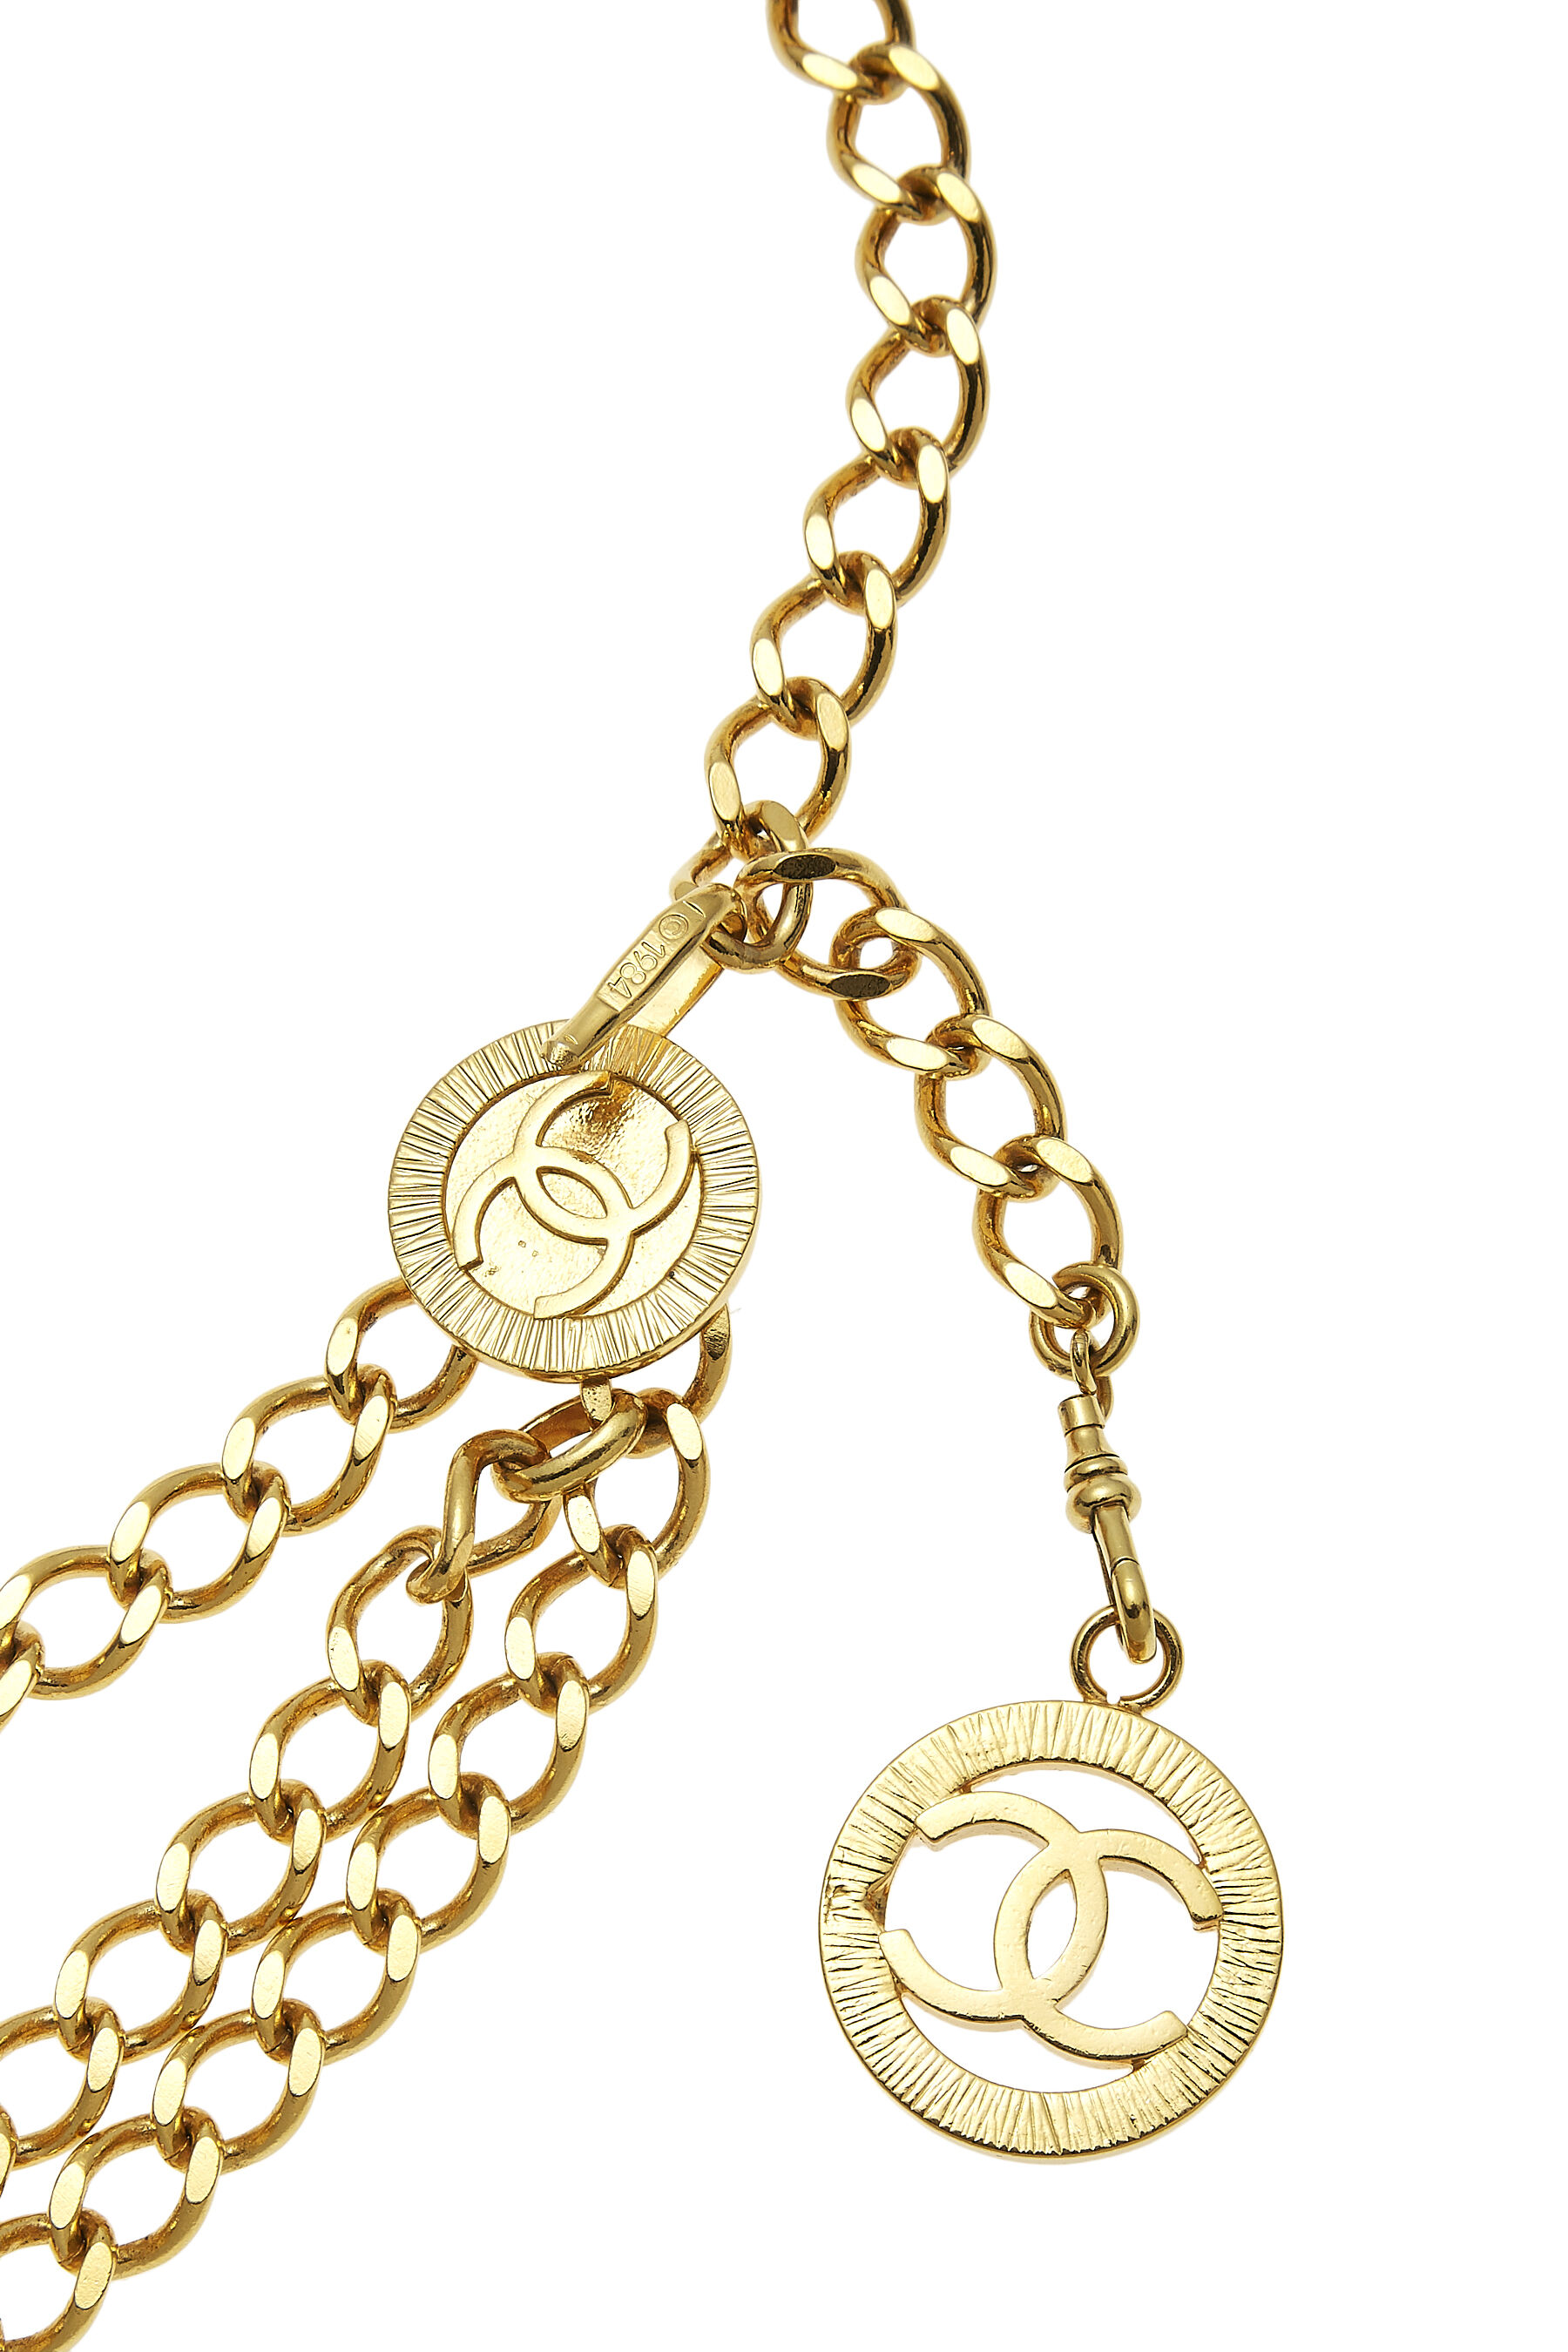 CHANEL 80s Vintage Gold Sunburst Logo Medallion Choke… - Gem